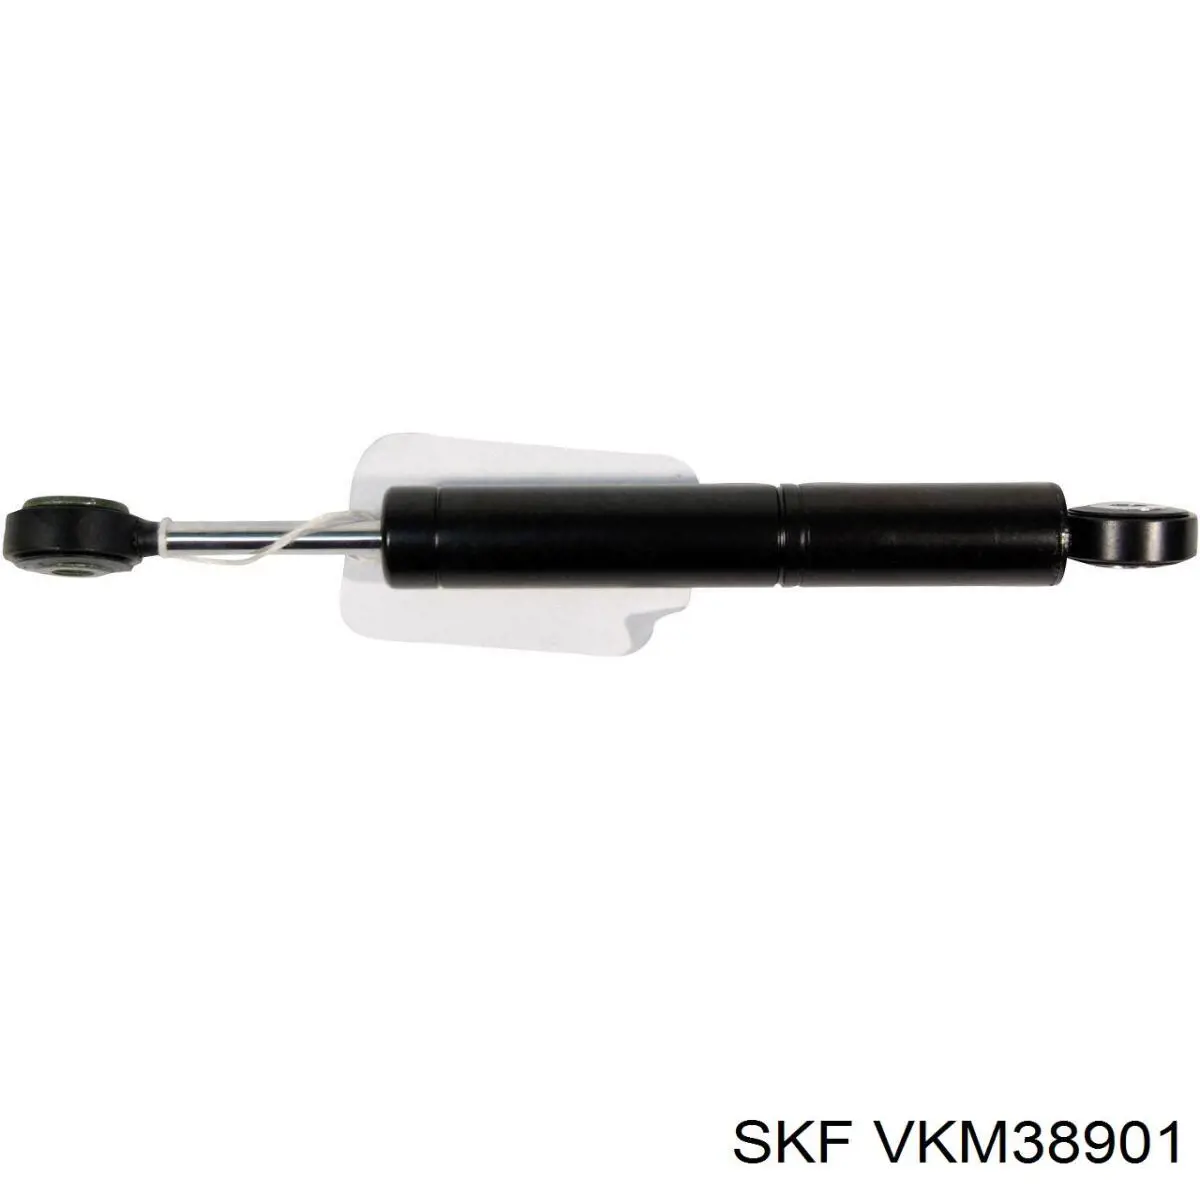 VKM38901 SKF tensor de correa de el amortiguador